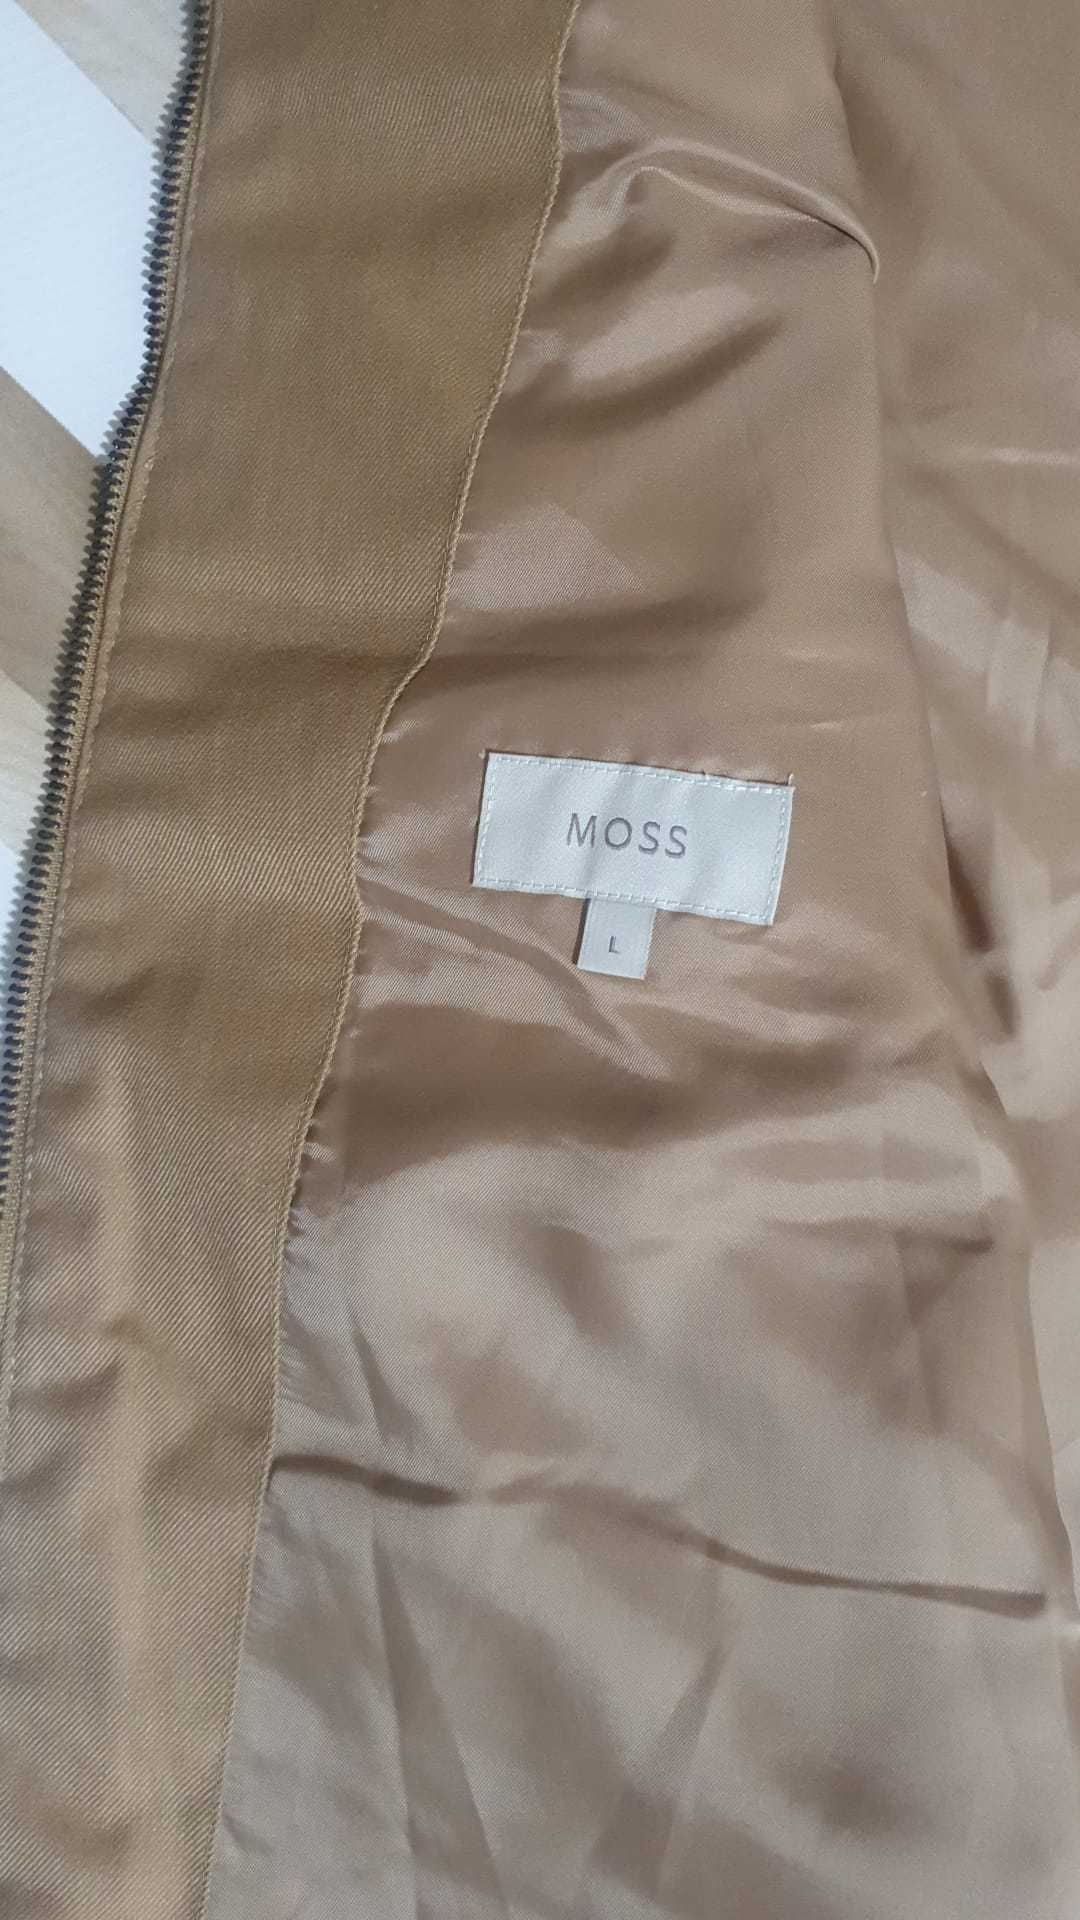 Vand vesta barbat Moss masura L originala noua cu eticheta.